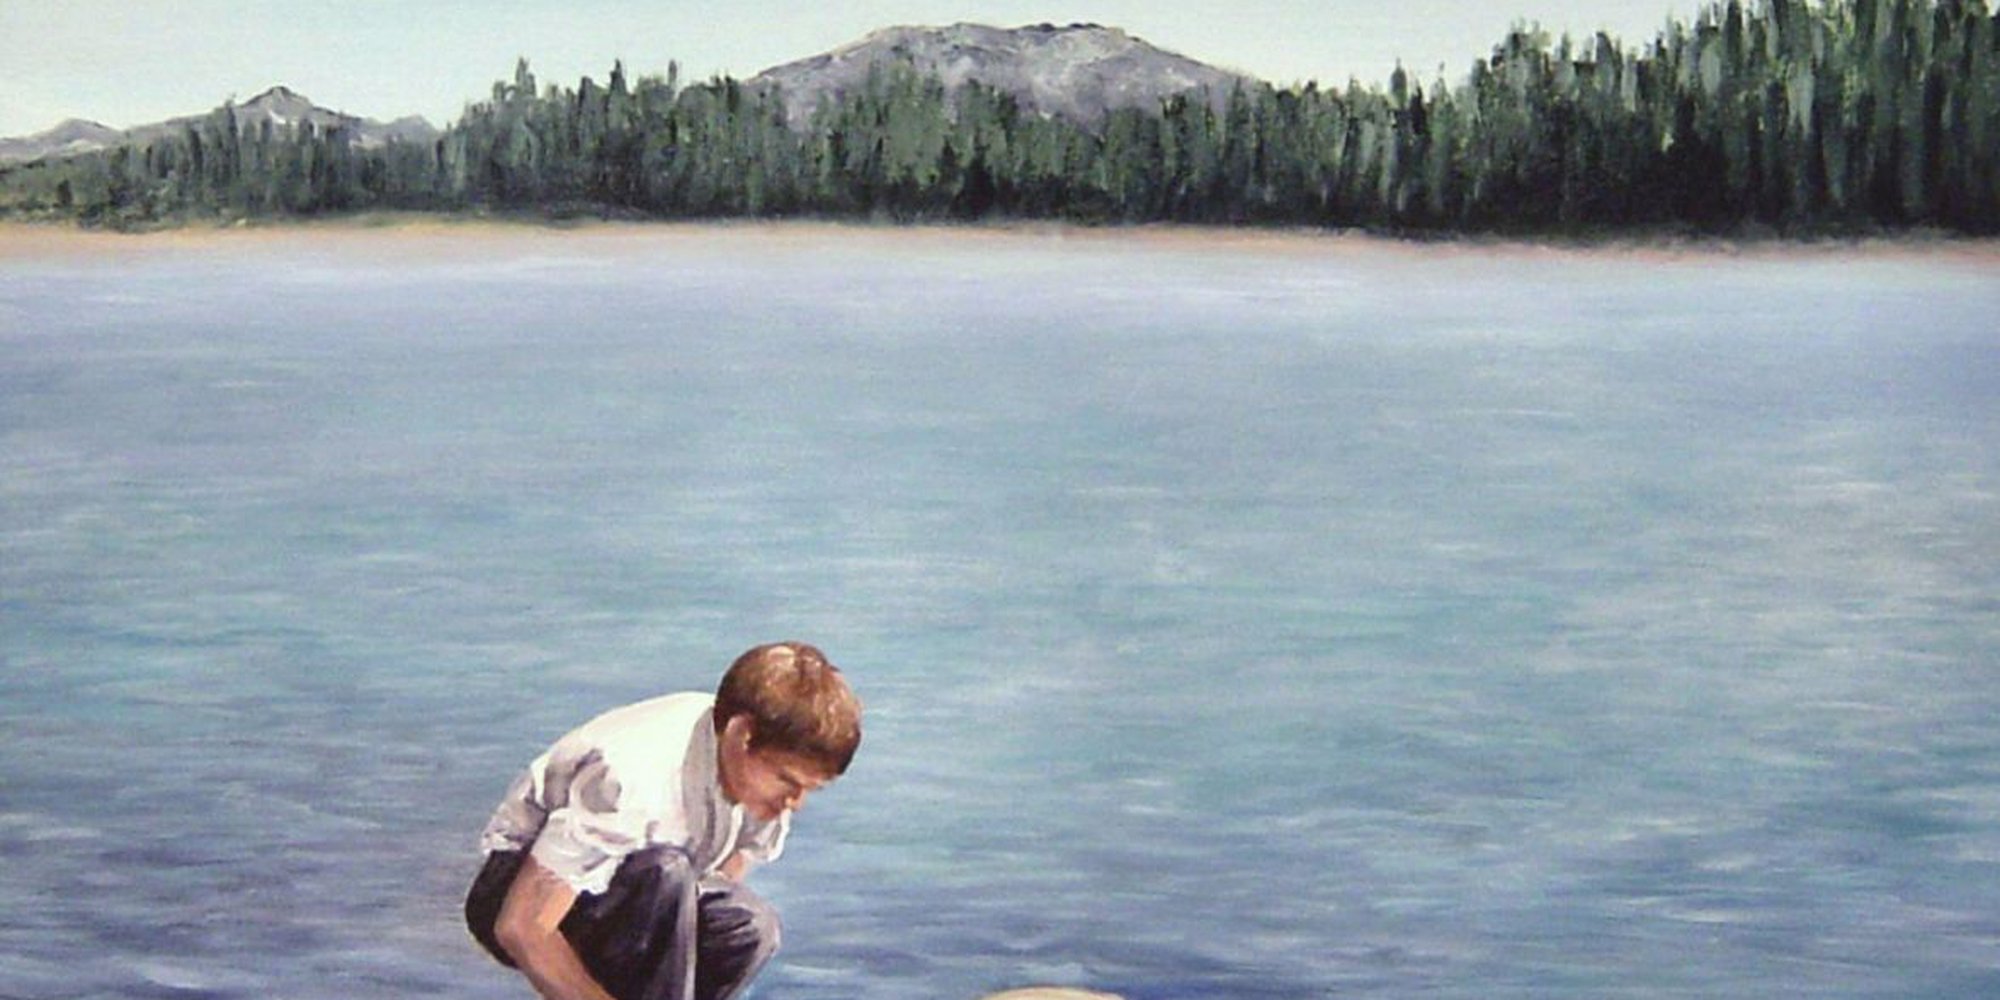 Art of the Day: "Douglas lake, 2009" by Jennifer Cussons